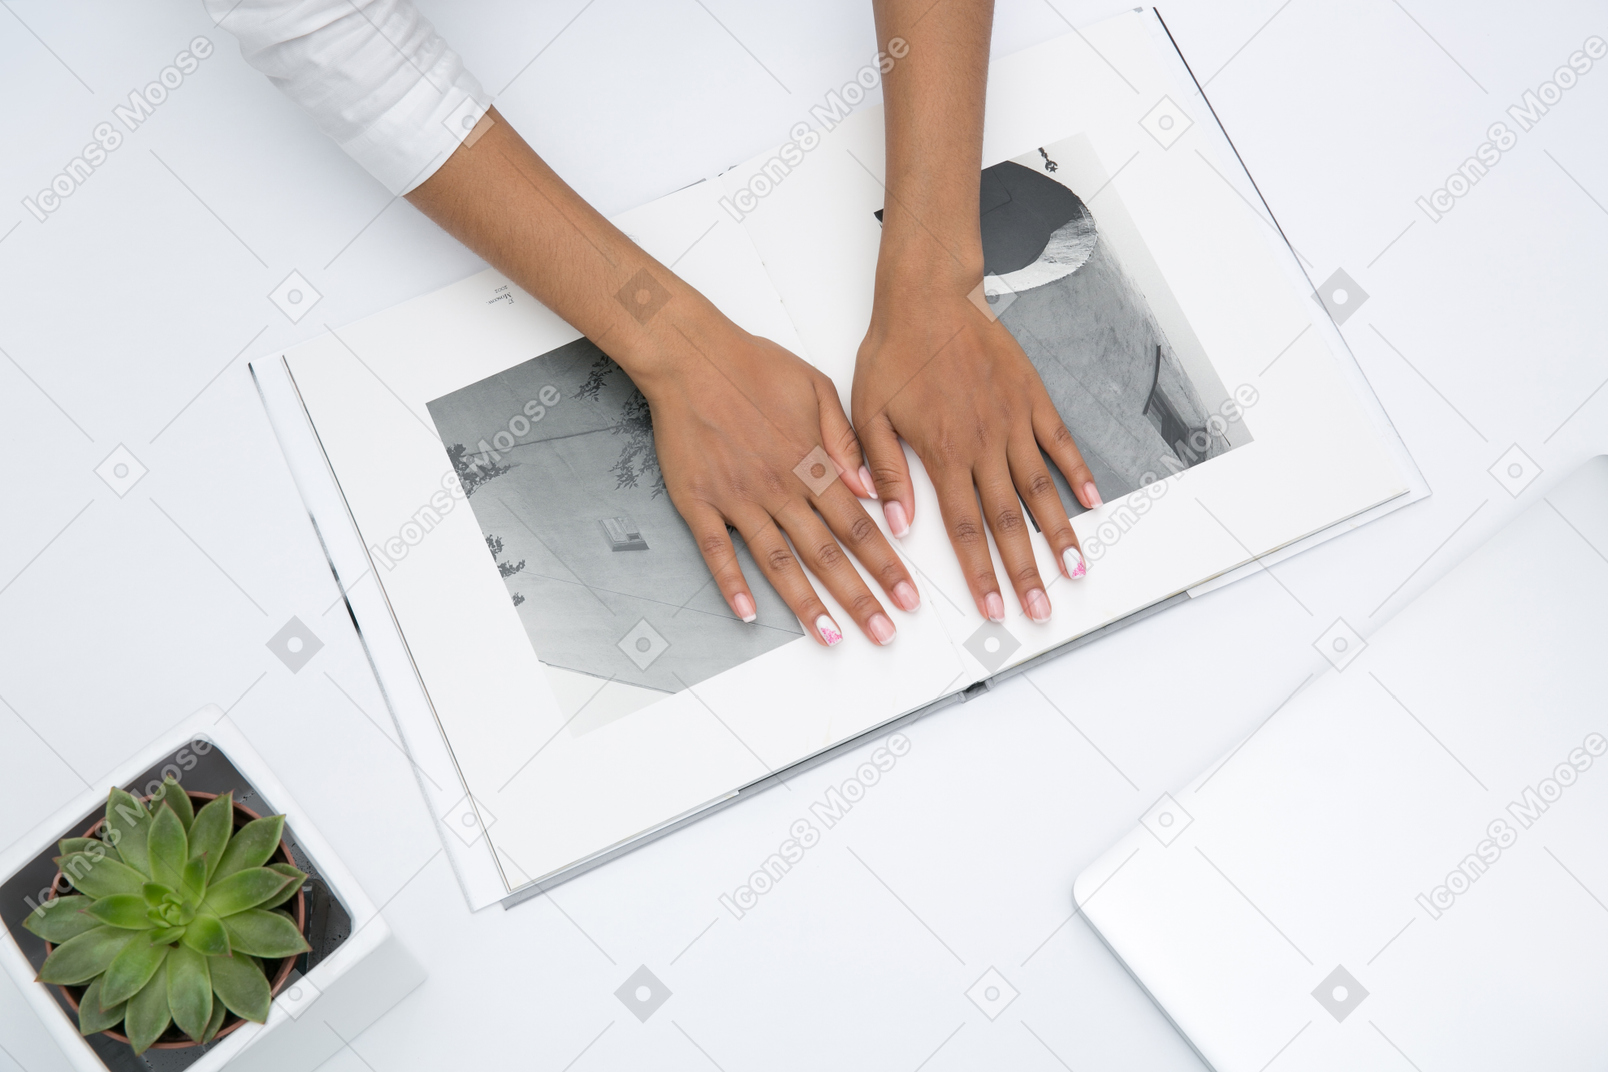 Mani femminili distese sull'album fotografico